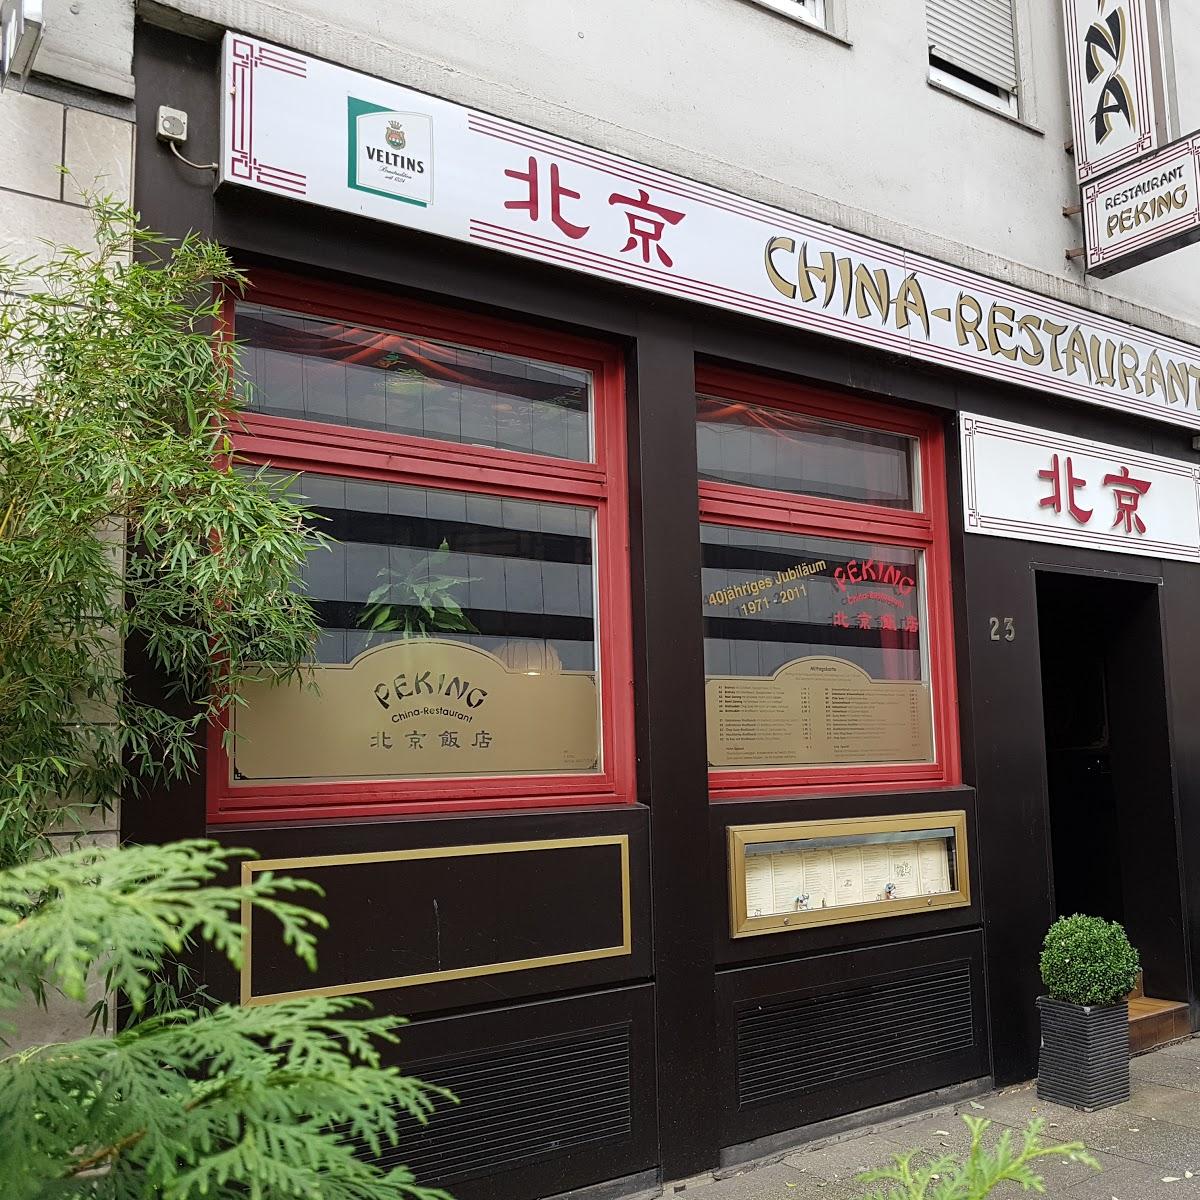 Restaurant "Chinarestaurant Peking" in Bremen